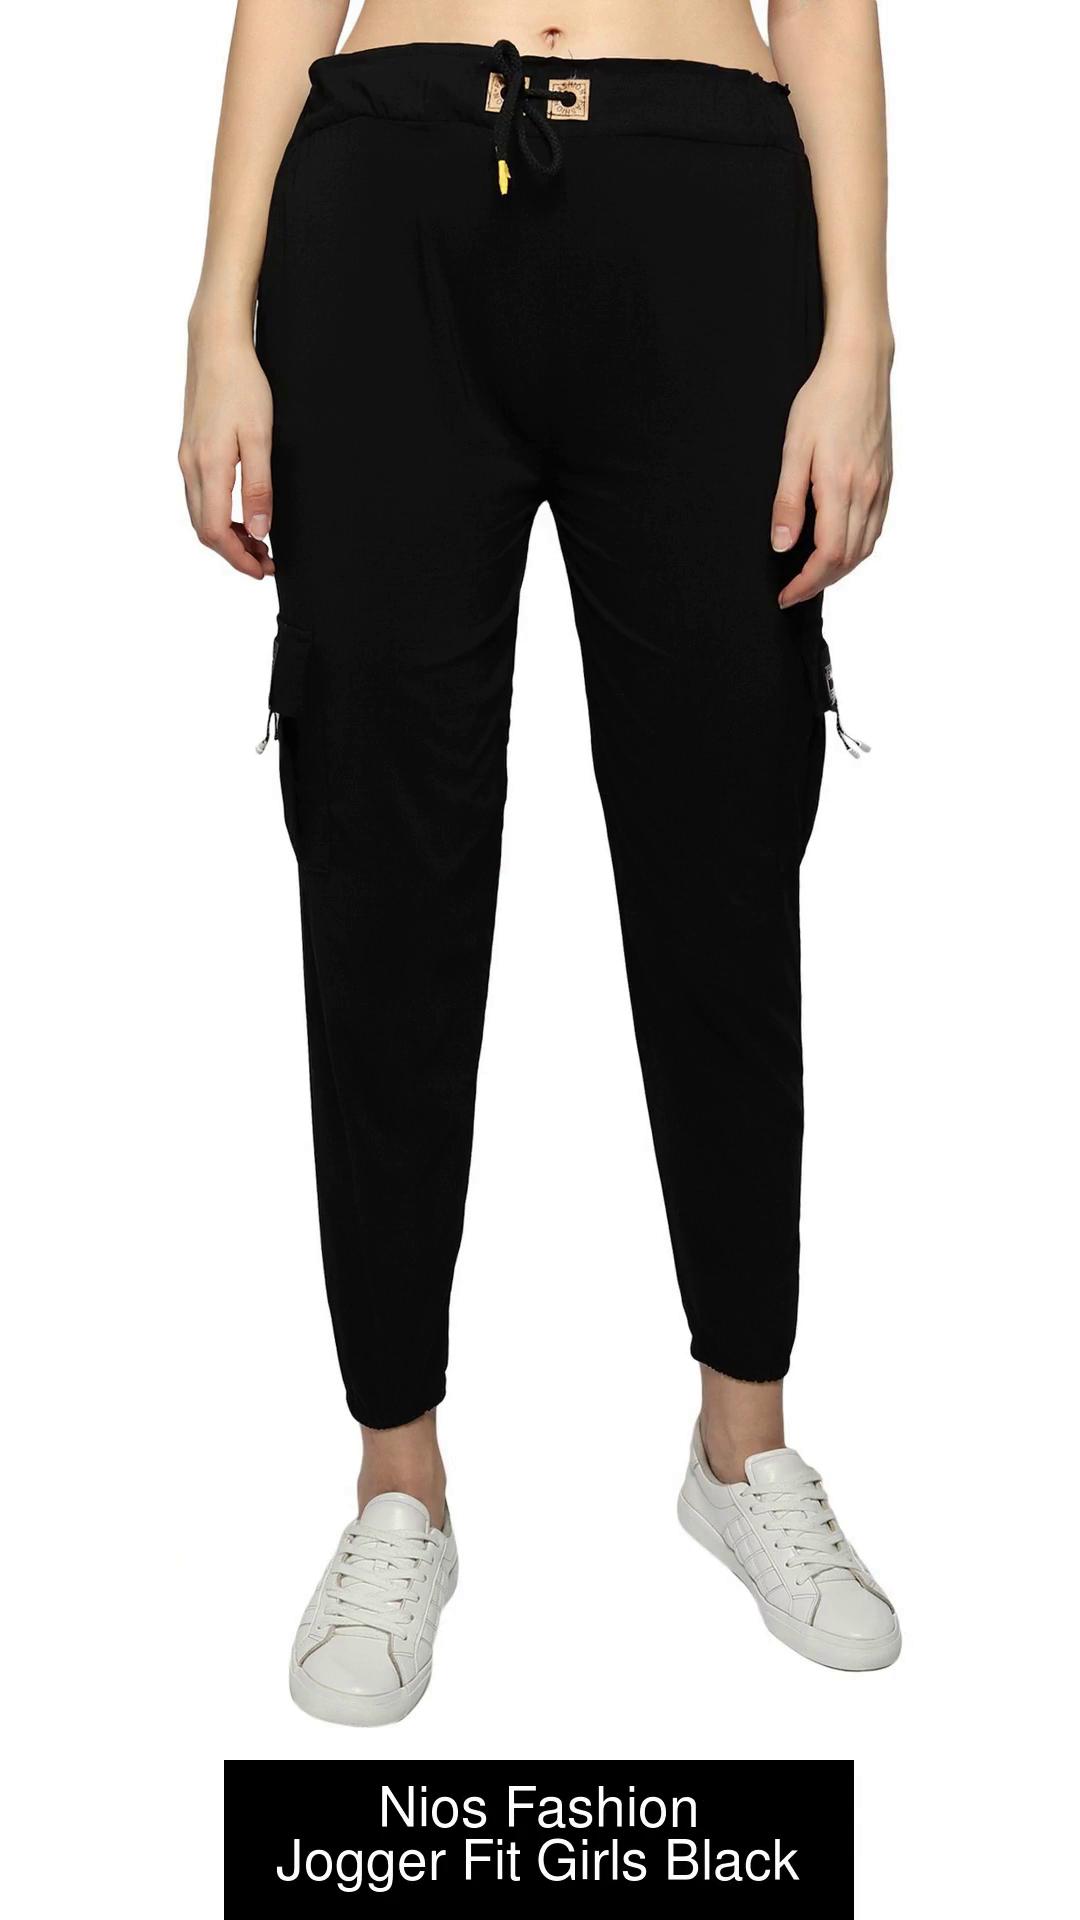 Nios Fashion Jogger Fit Girls Black Jeans - Buy Nios Fashion